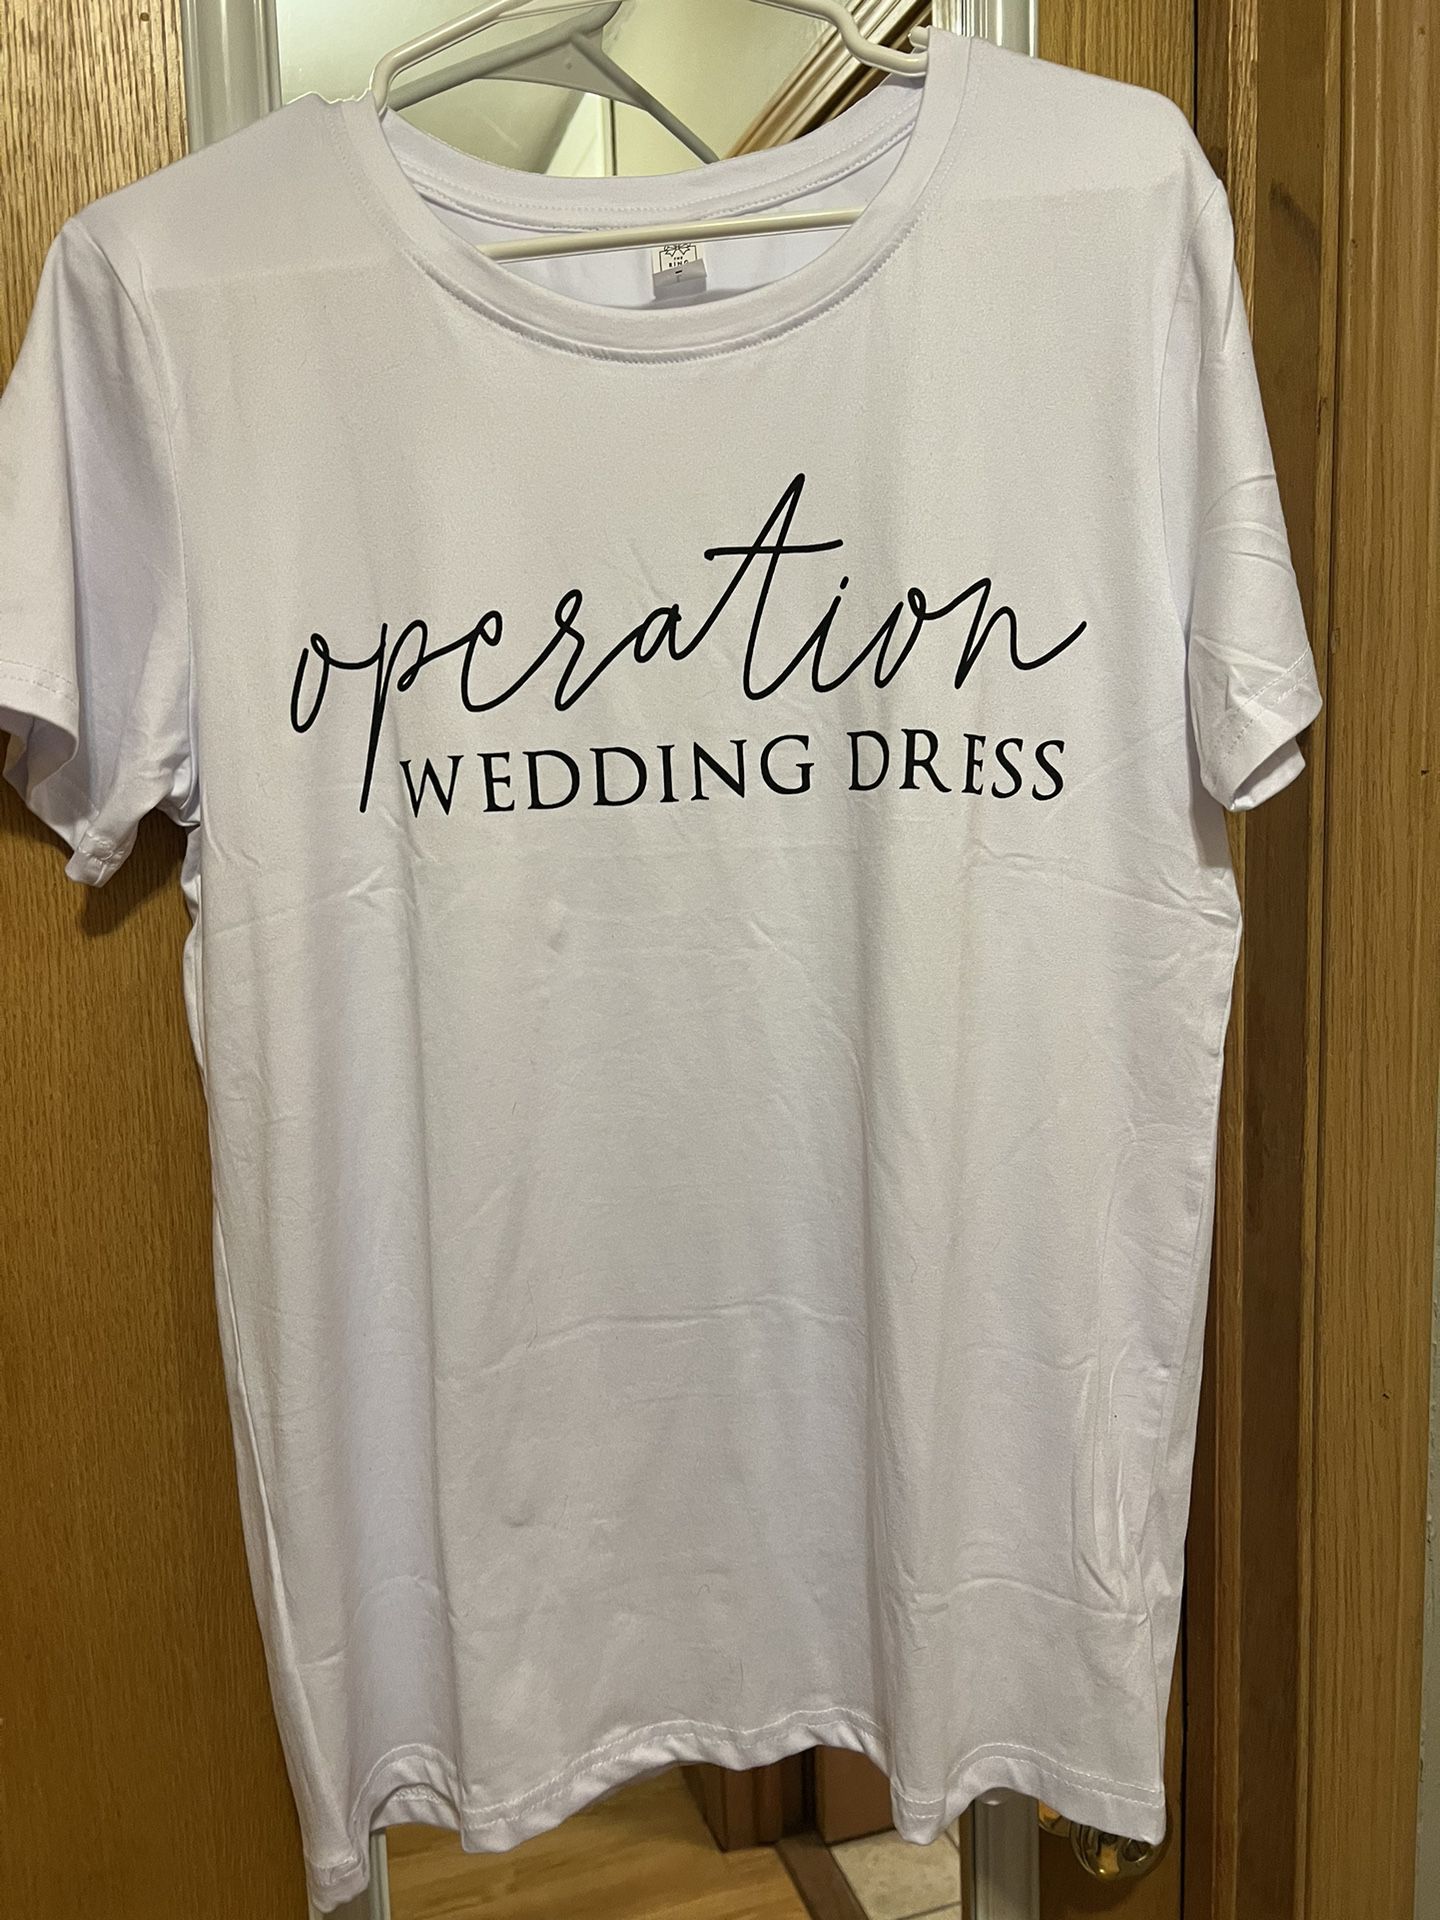 Operation Wedding Dress T Shirt 